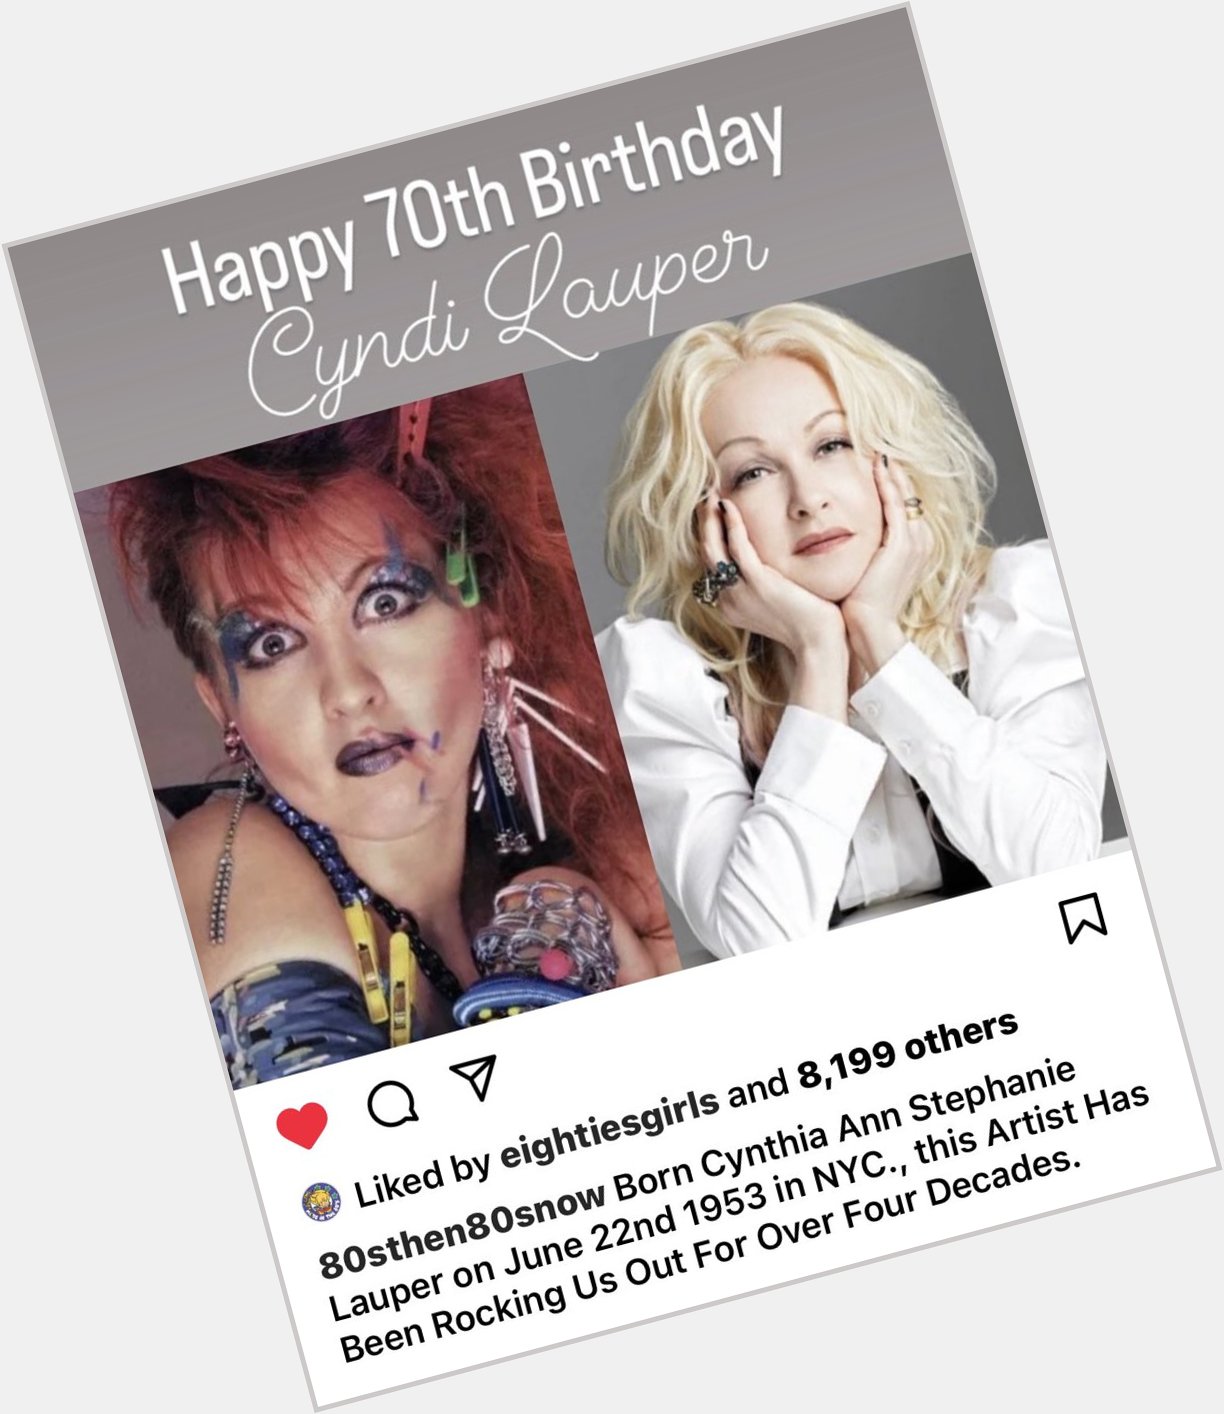 Happy Birthday Cyndi Lauper! Love you!!! 